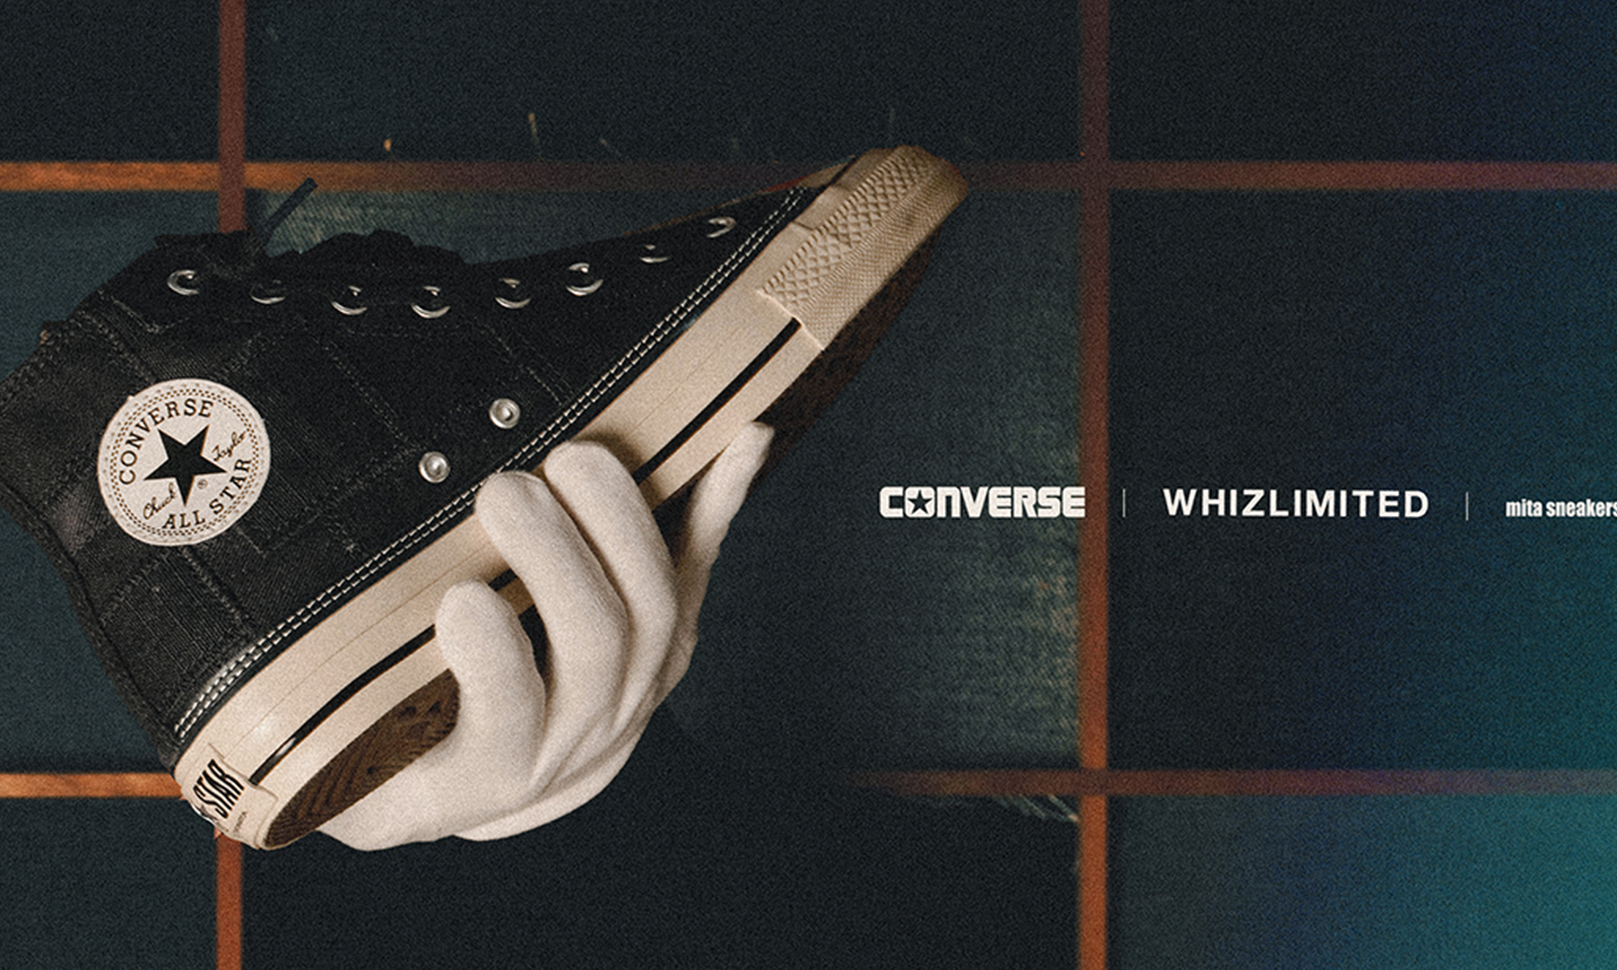 CONVERSE x WHIZ LIMITED x mita sneakers 三方合作 ALL STAR 鞋款亮相